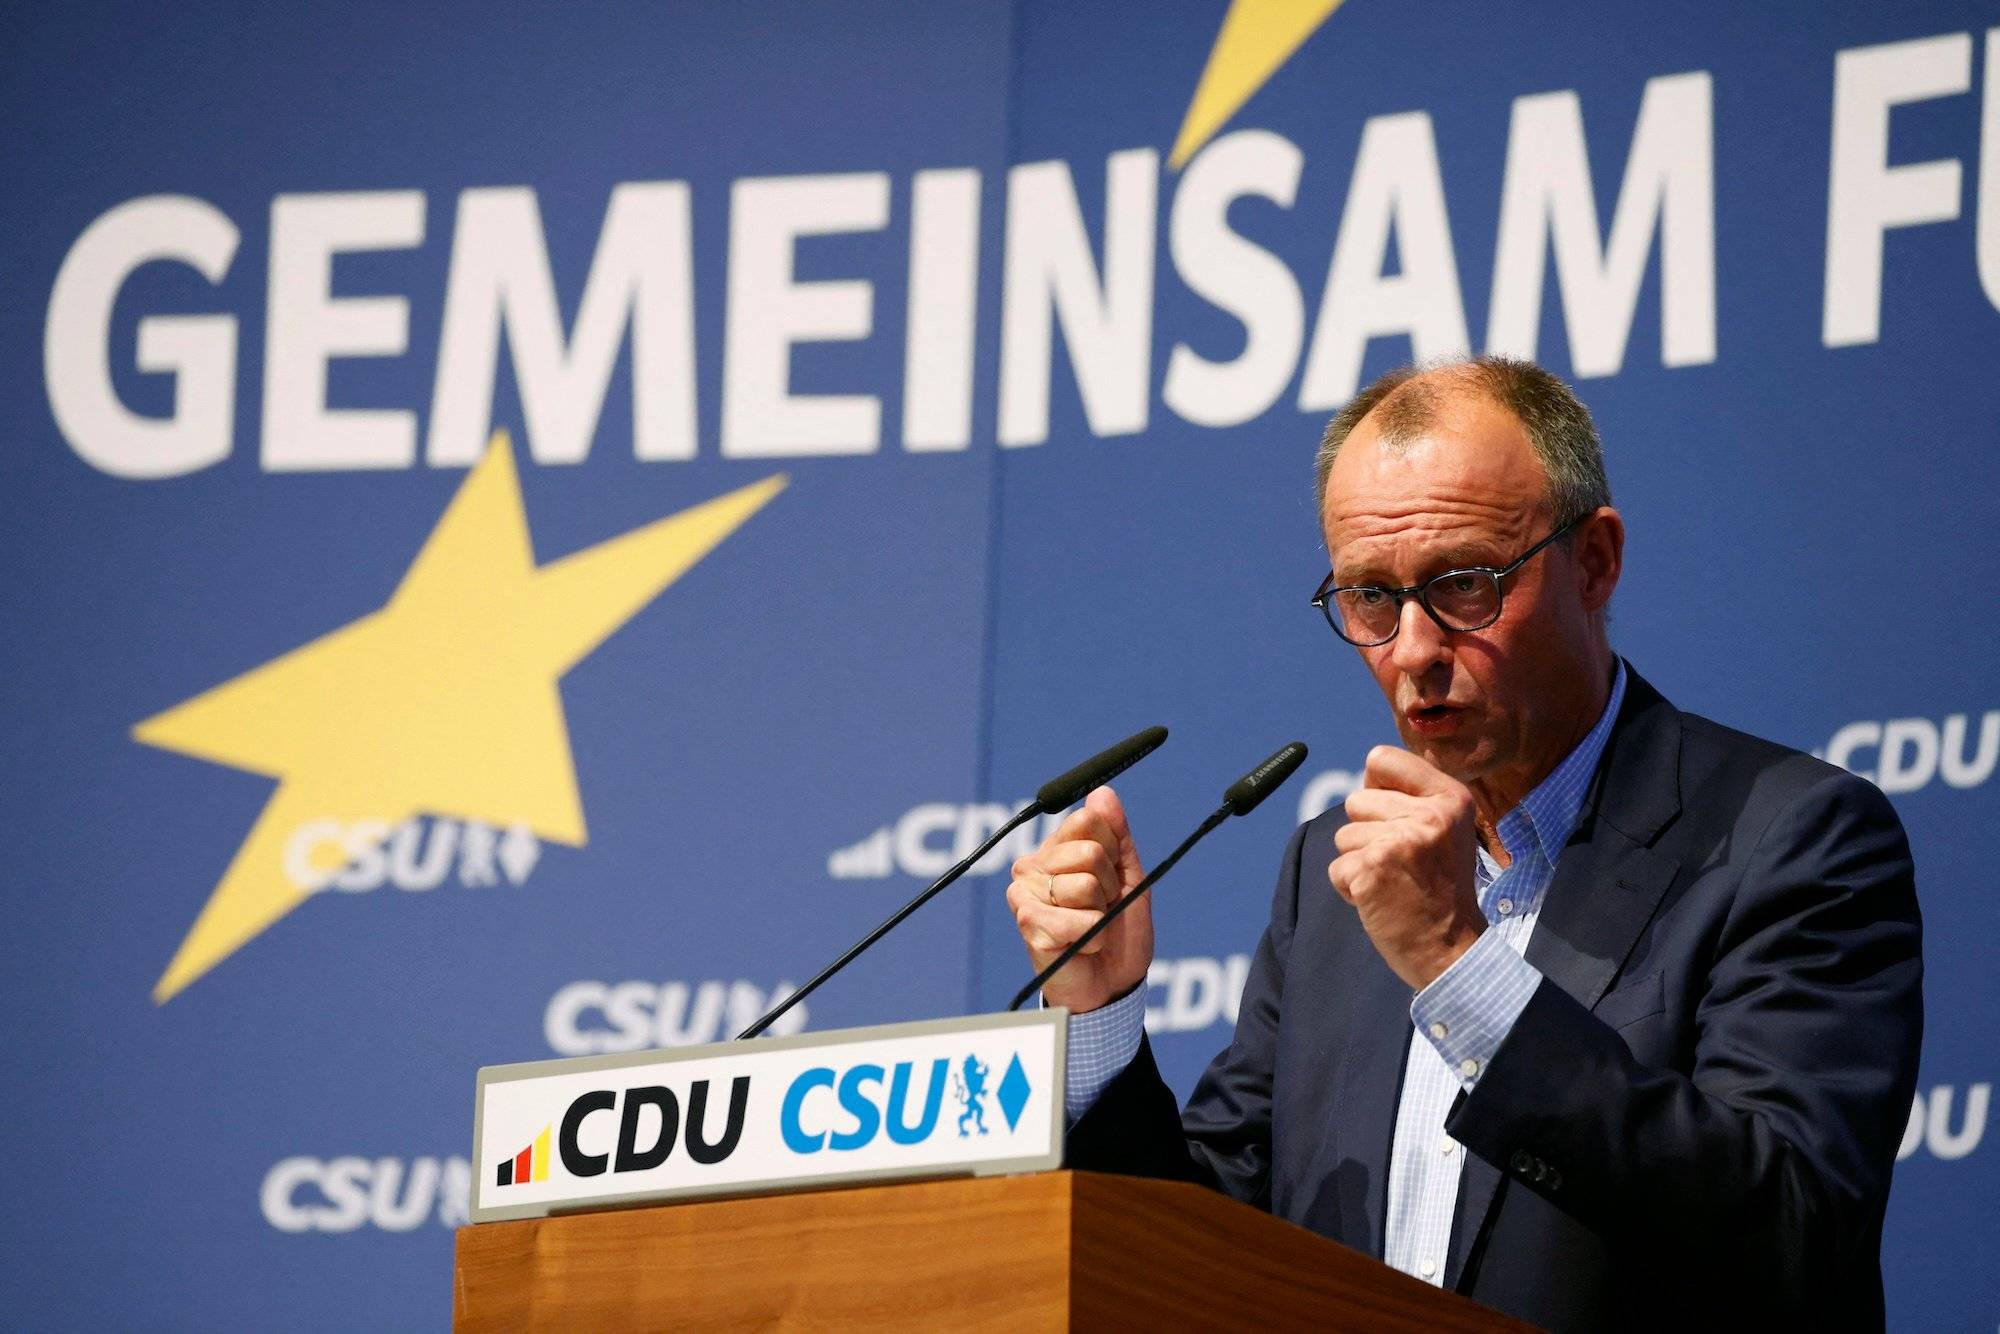 Lider CDU-CSU Friedrich Merz podczas wiecu